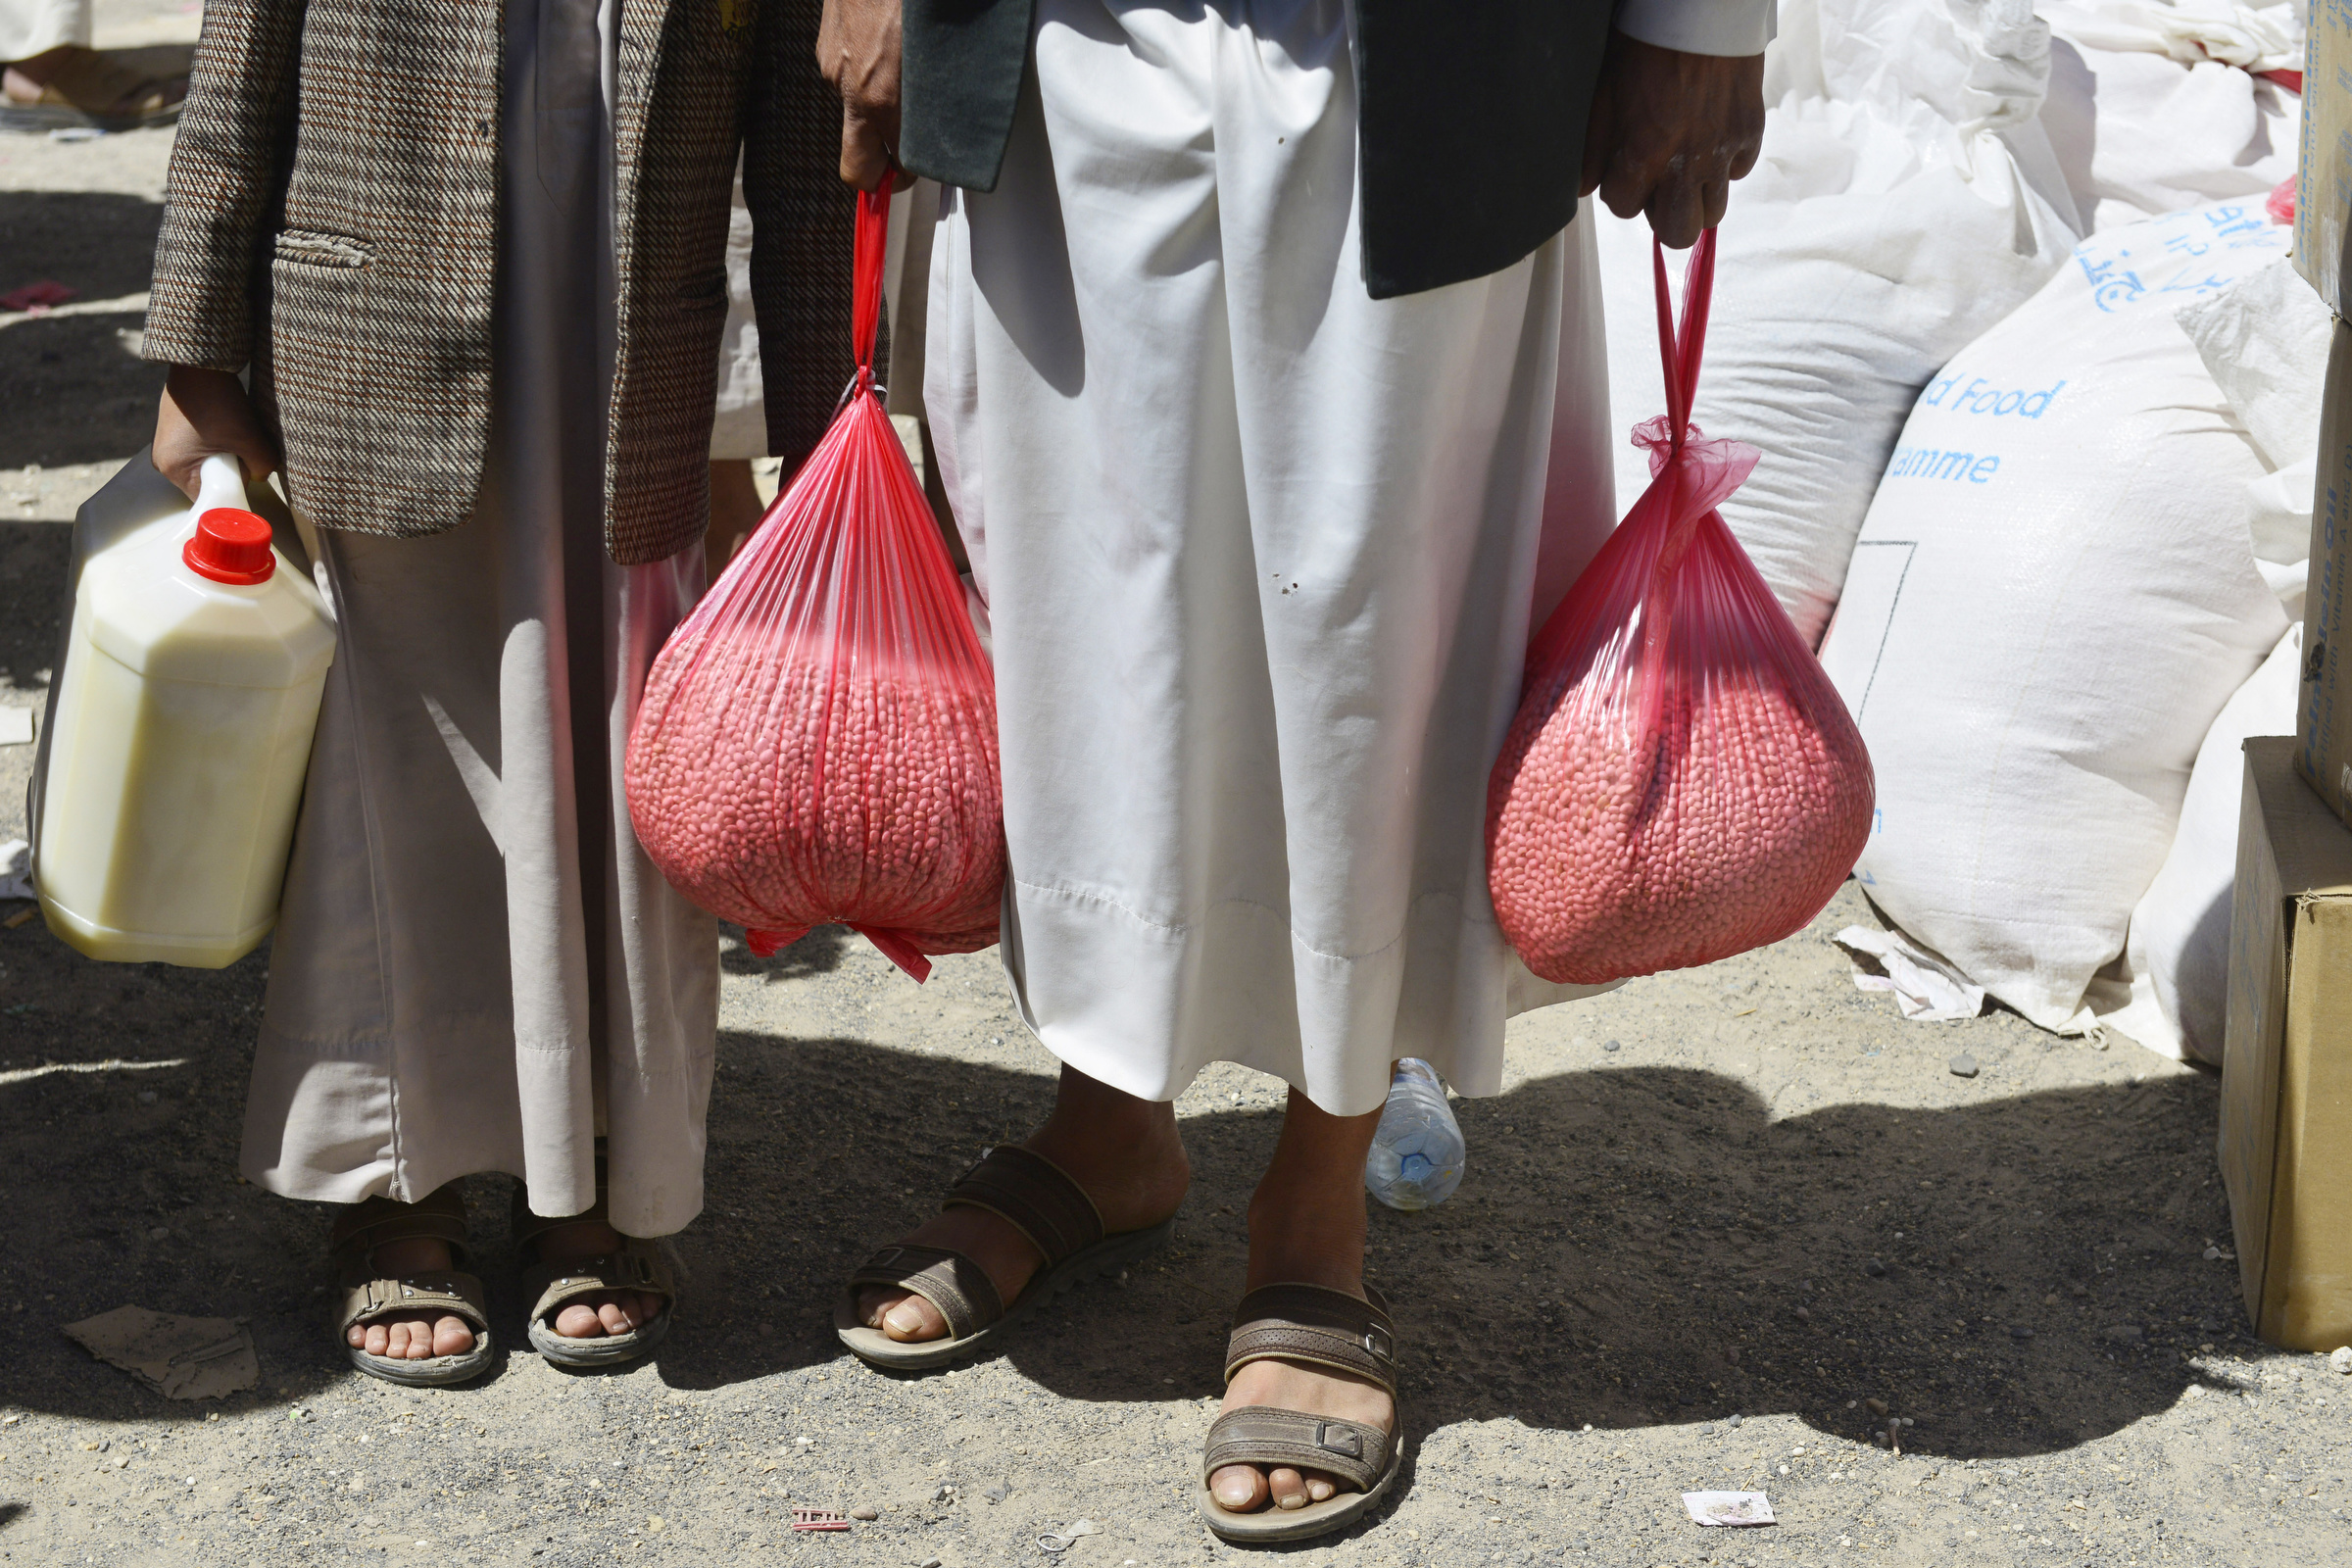 Yemenis receive food at a distribution center in Sana'a, Yemen, Feb. 13. (CNS/EPA/Yahya Arhab)